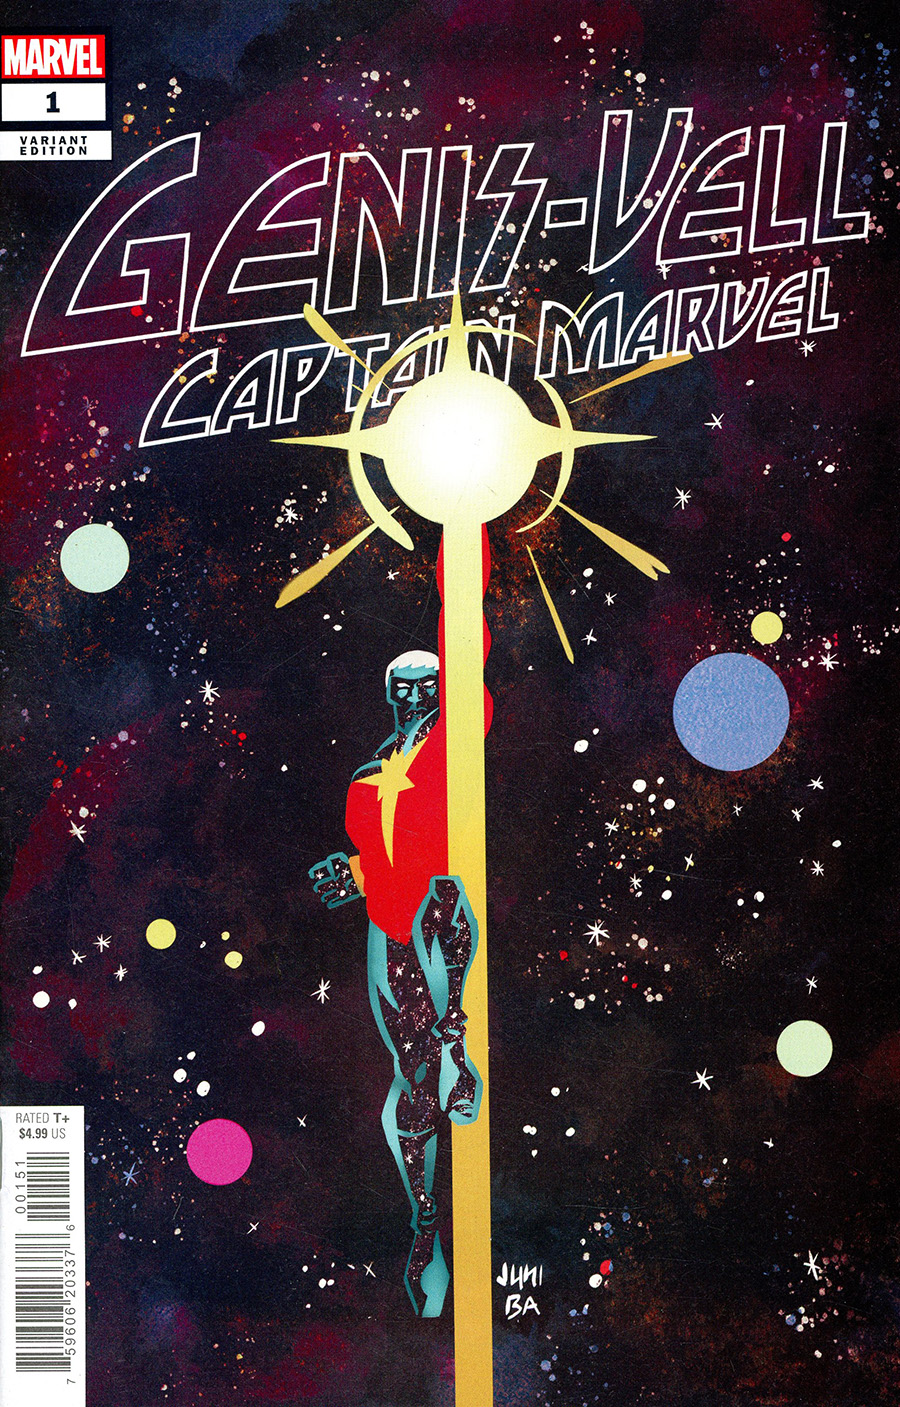 Genis-Vell Captain Marvel #1 Cover E Incentive Juni Ba Variant Cover